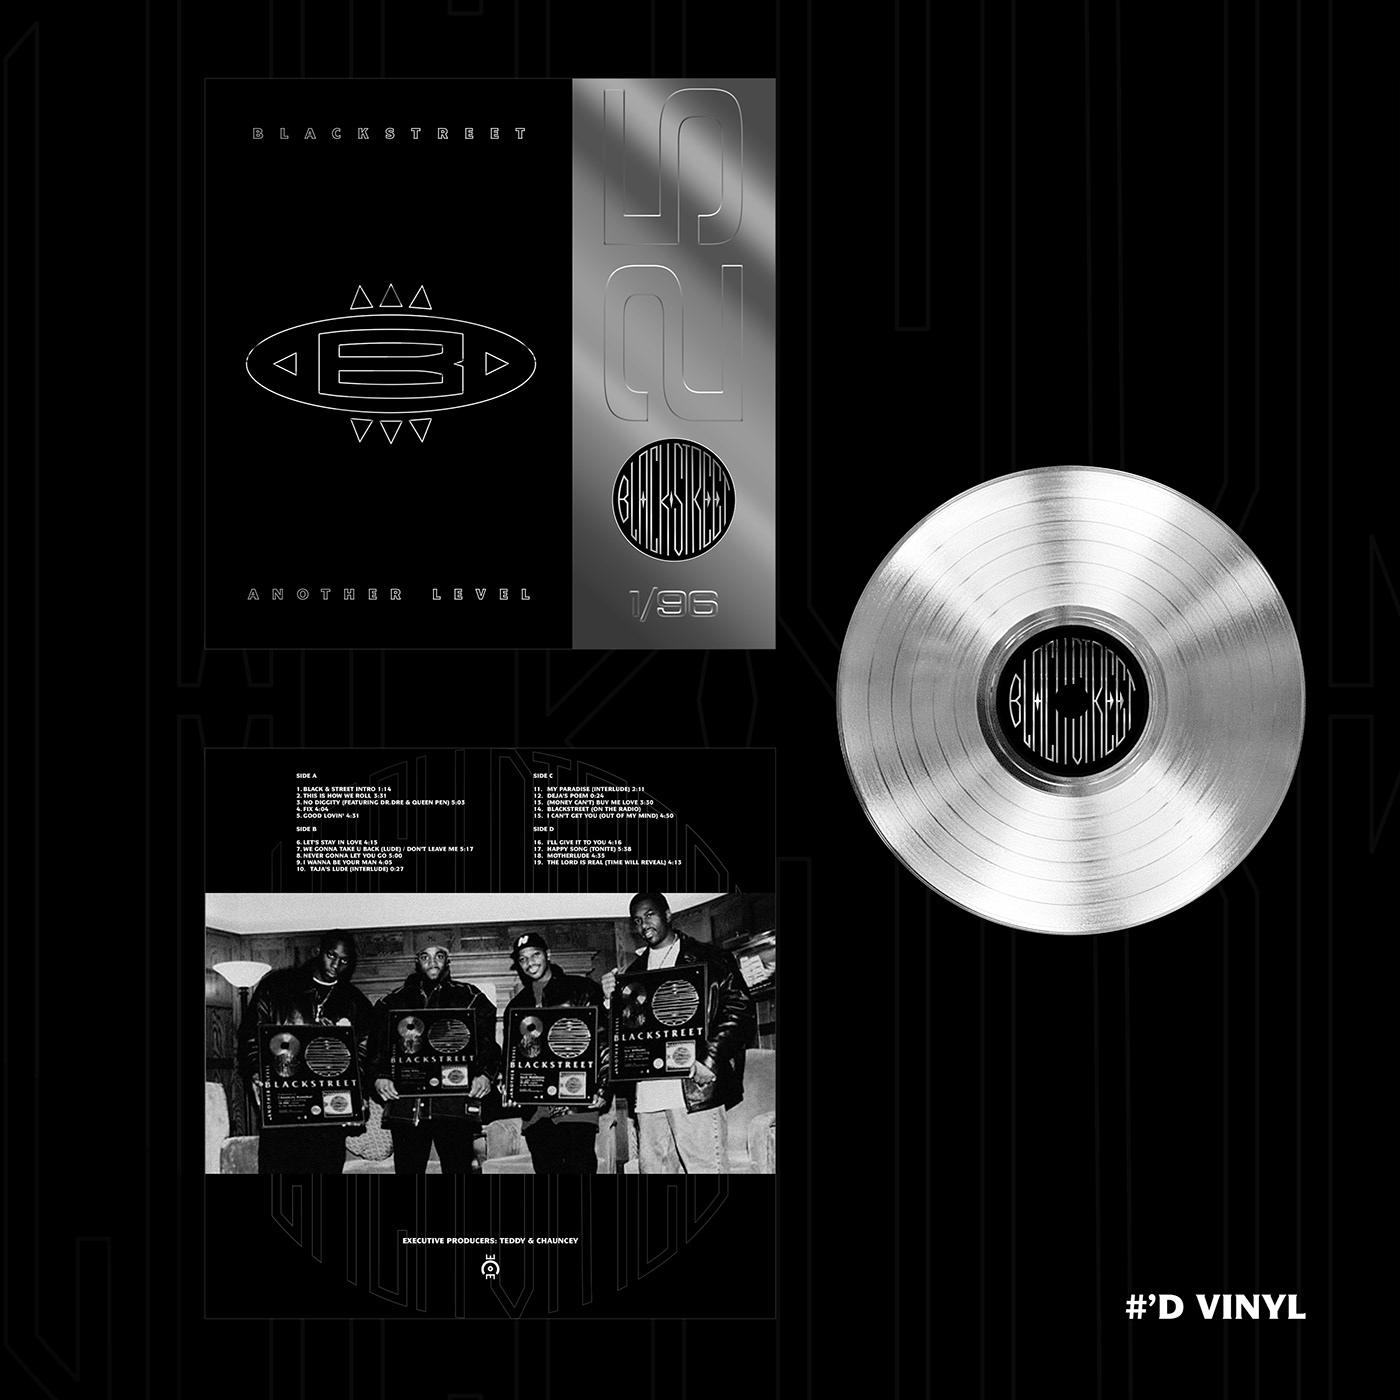 25th Anniversary 90s blackstreet Cover Art cover design Interscope music RNB vinyl Vinyl Cover